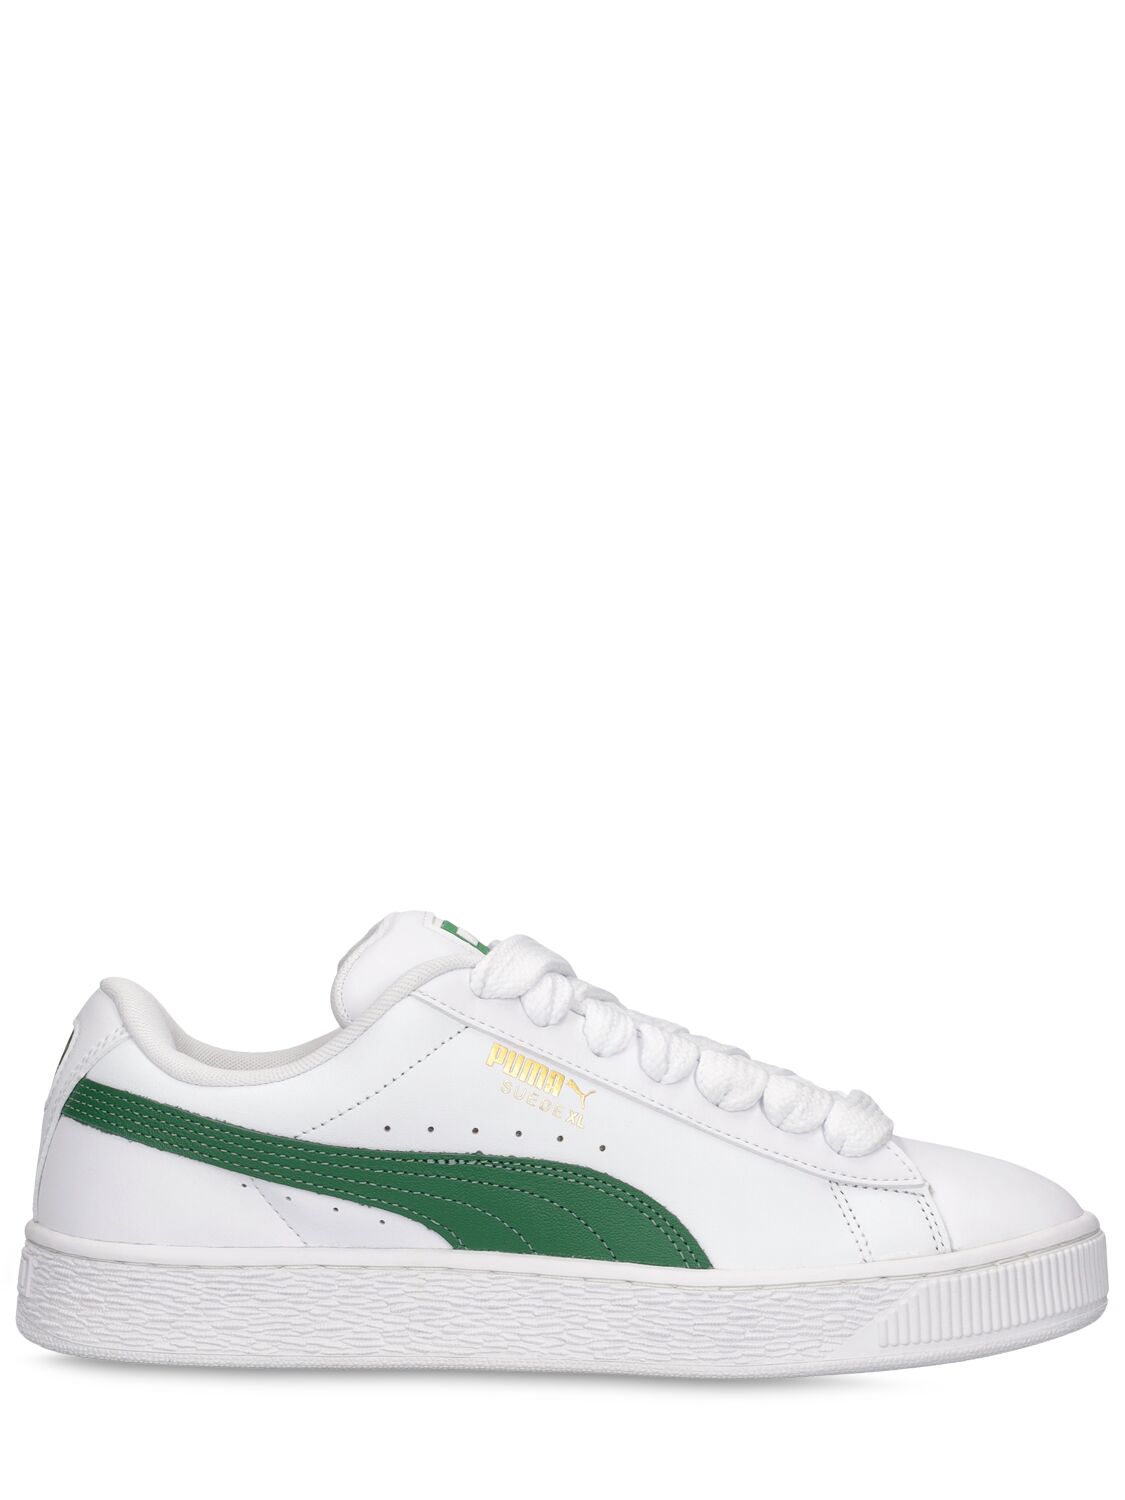 Puma Xl Leather Sneakers In White,vine